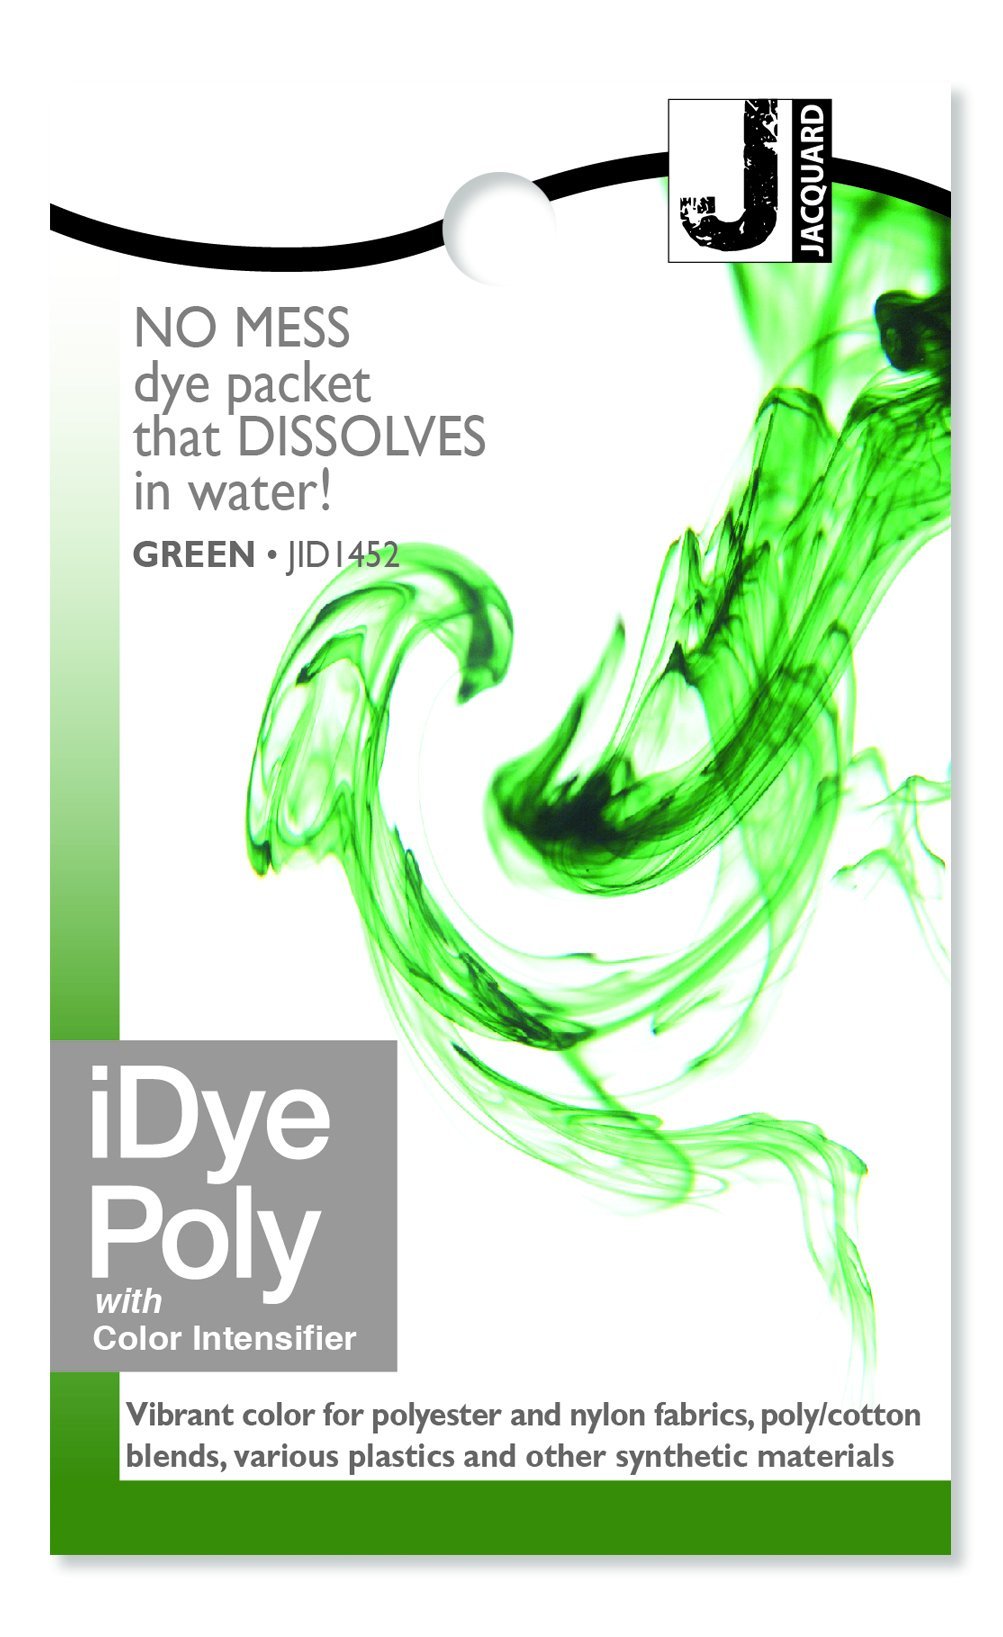 Comprar iDye colorante textil, online